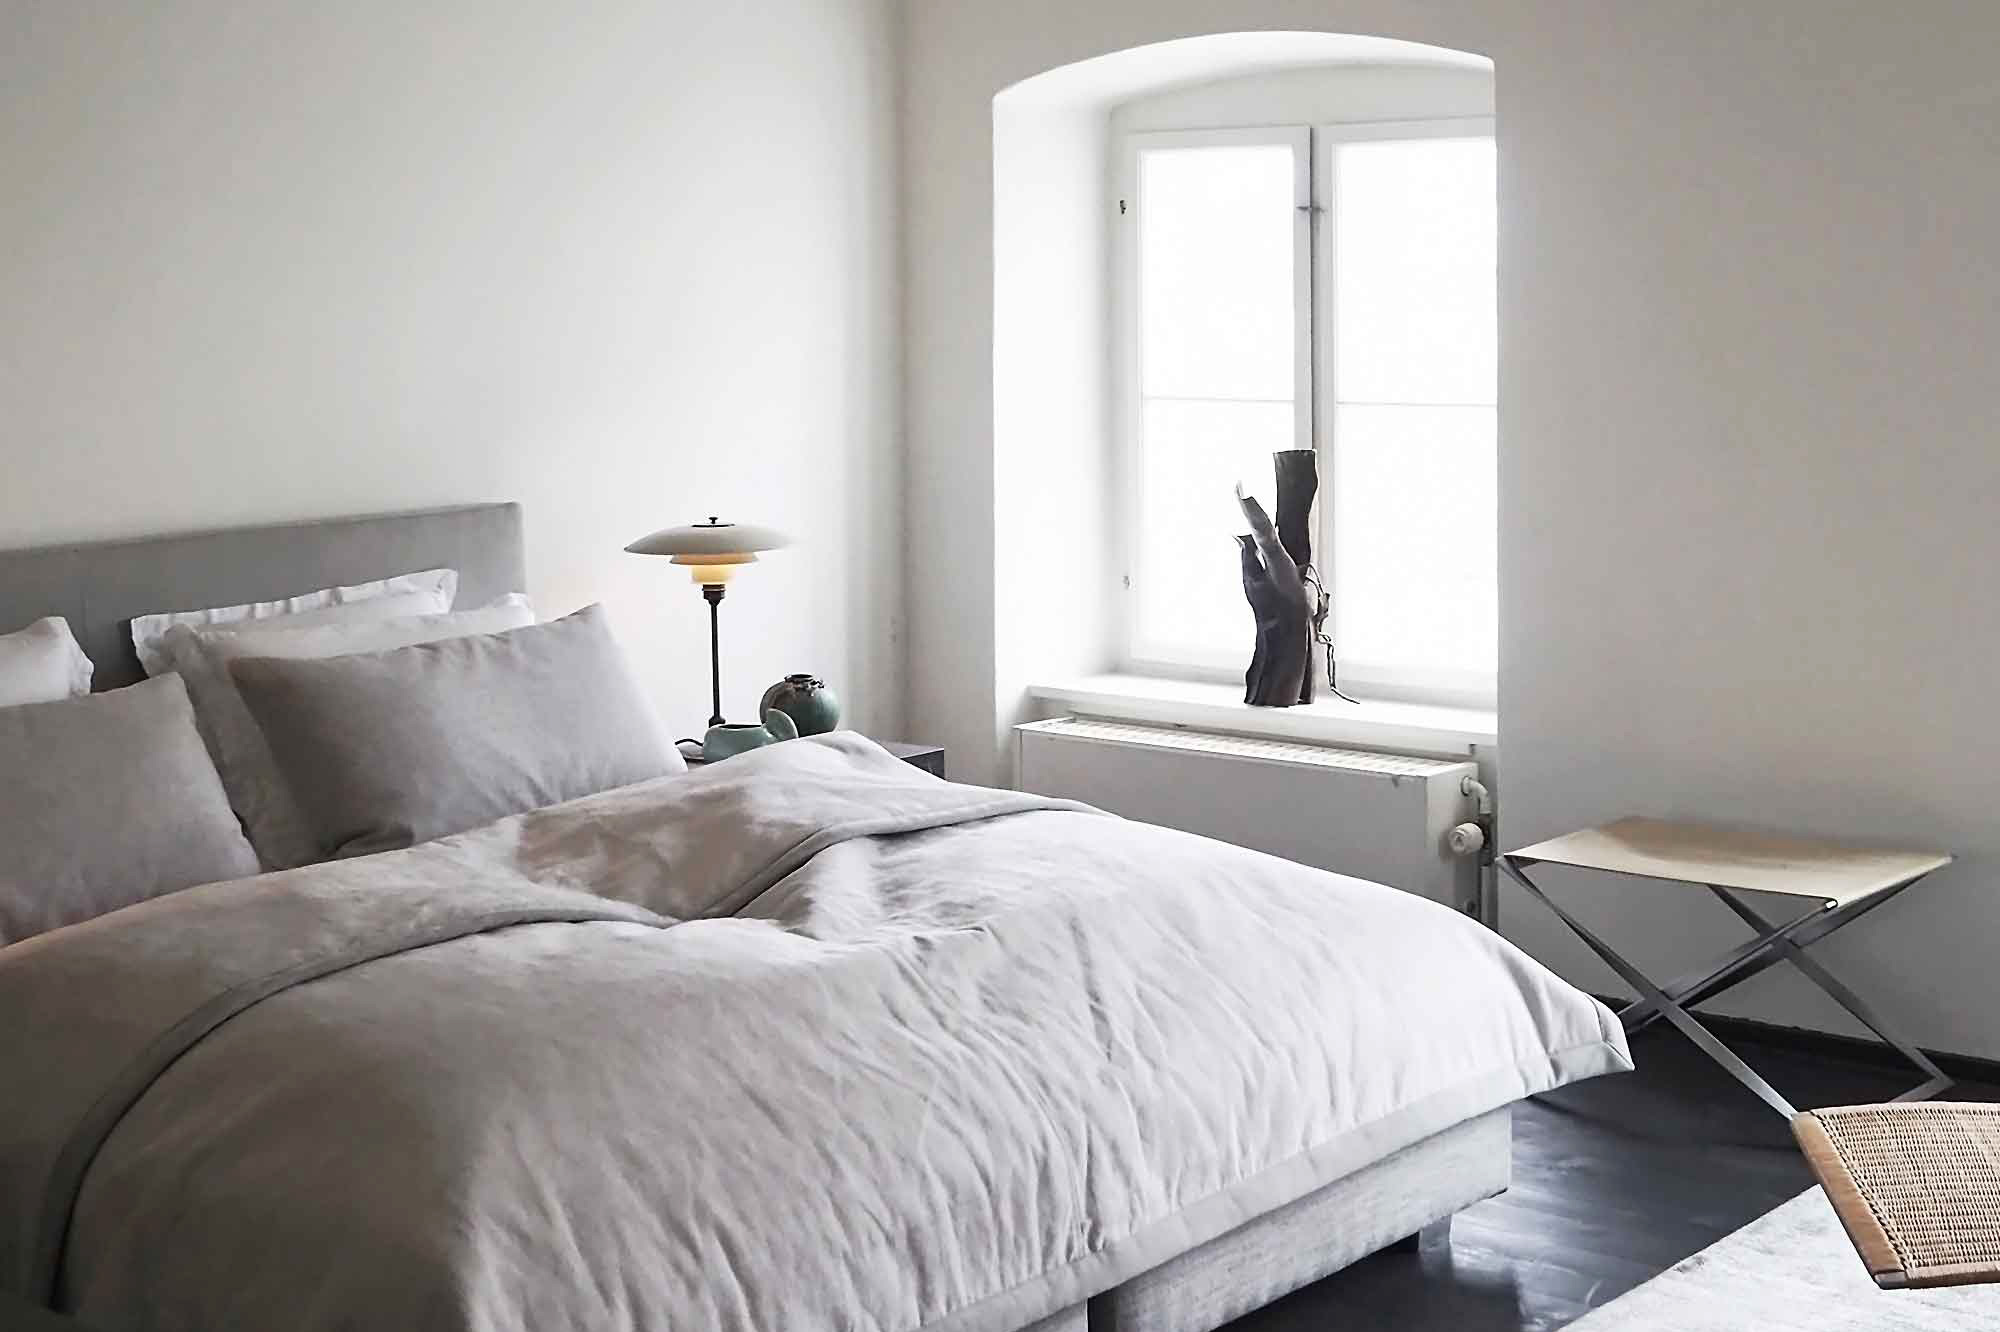 Home tour - a Copenhagen house brimming with vintage Danish design | These Four Walls blog